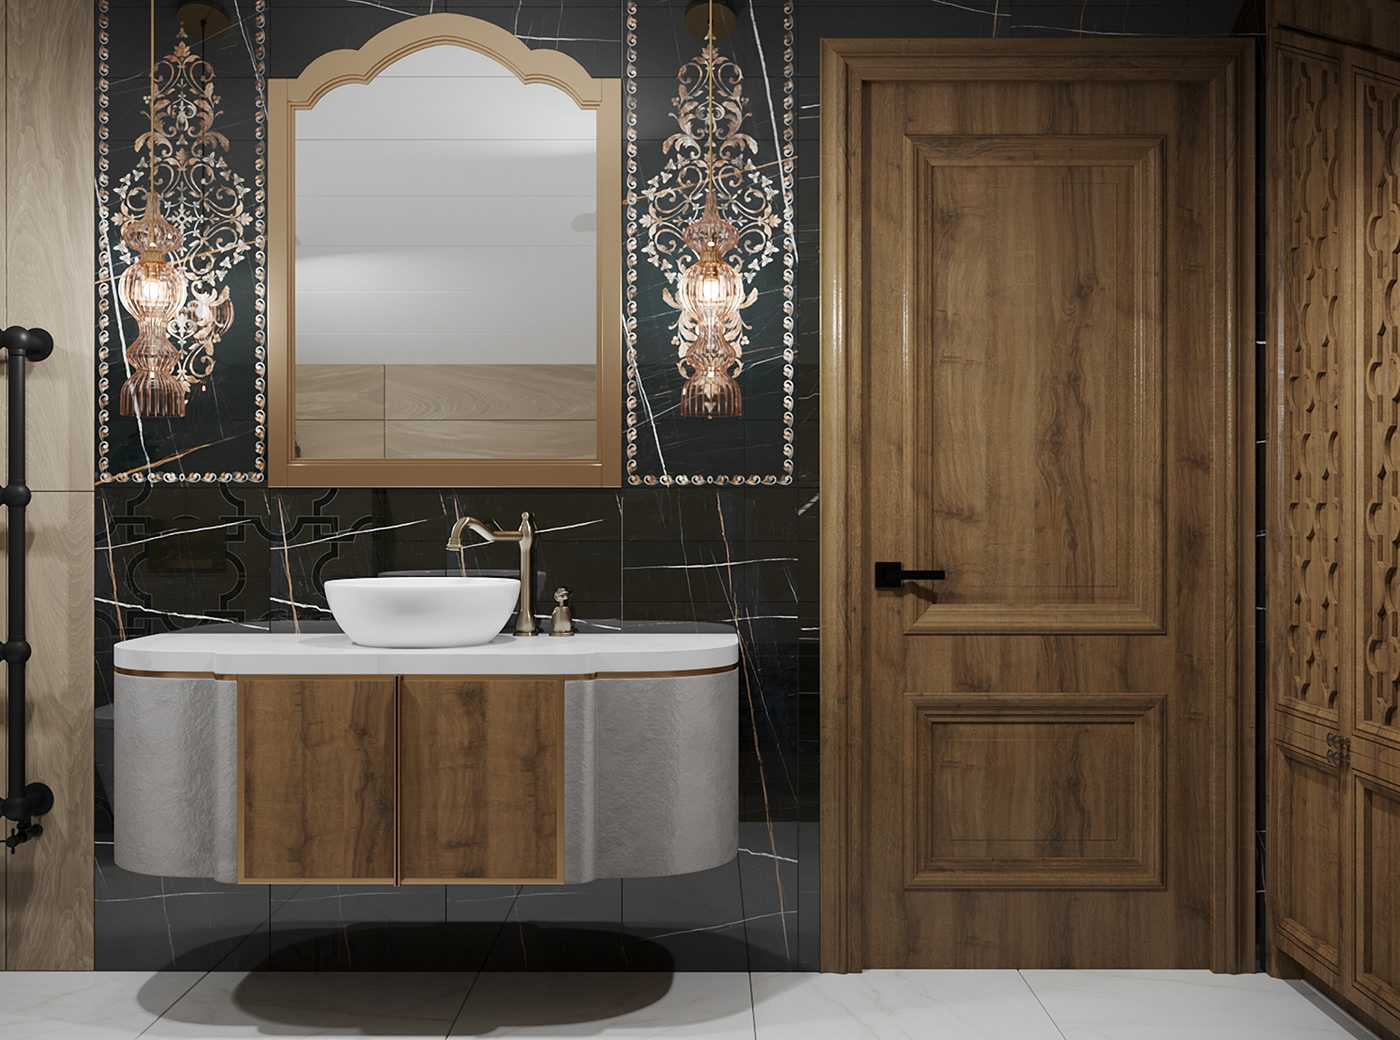 bathroom Interior architecture interior design  дизайн интерьера Санузел Душевая wc Kerama marazzi туалет